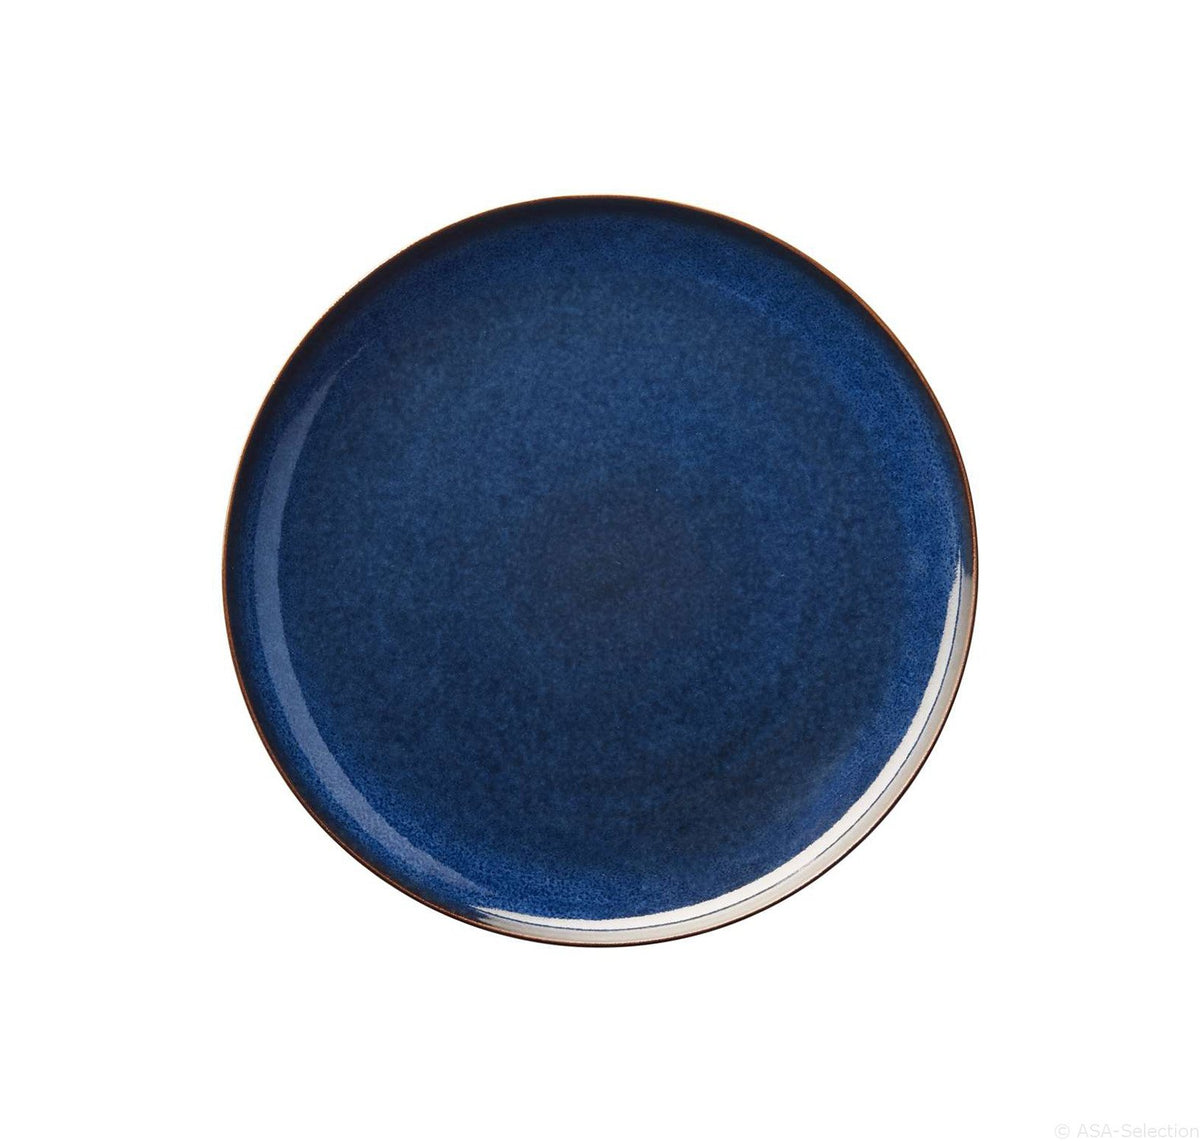 Saisons Midnight Blue Side Plate